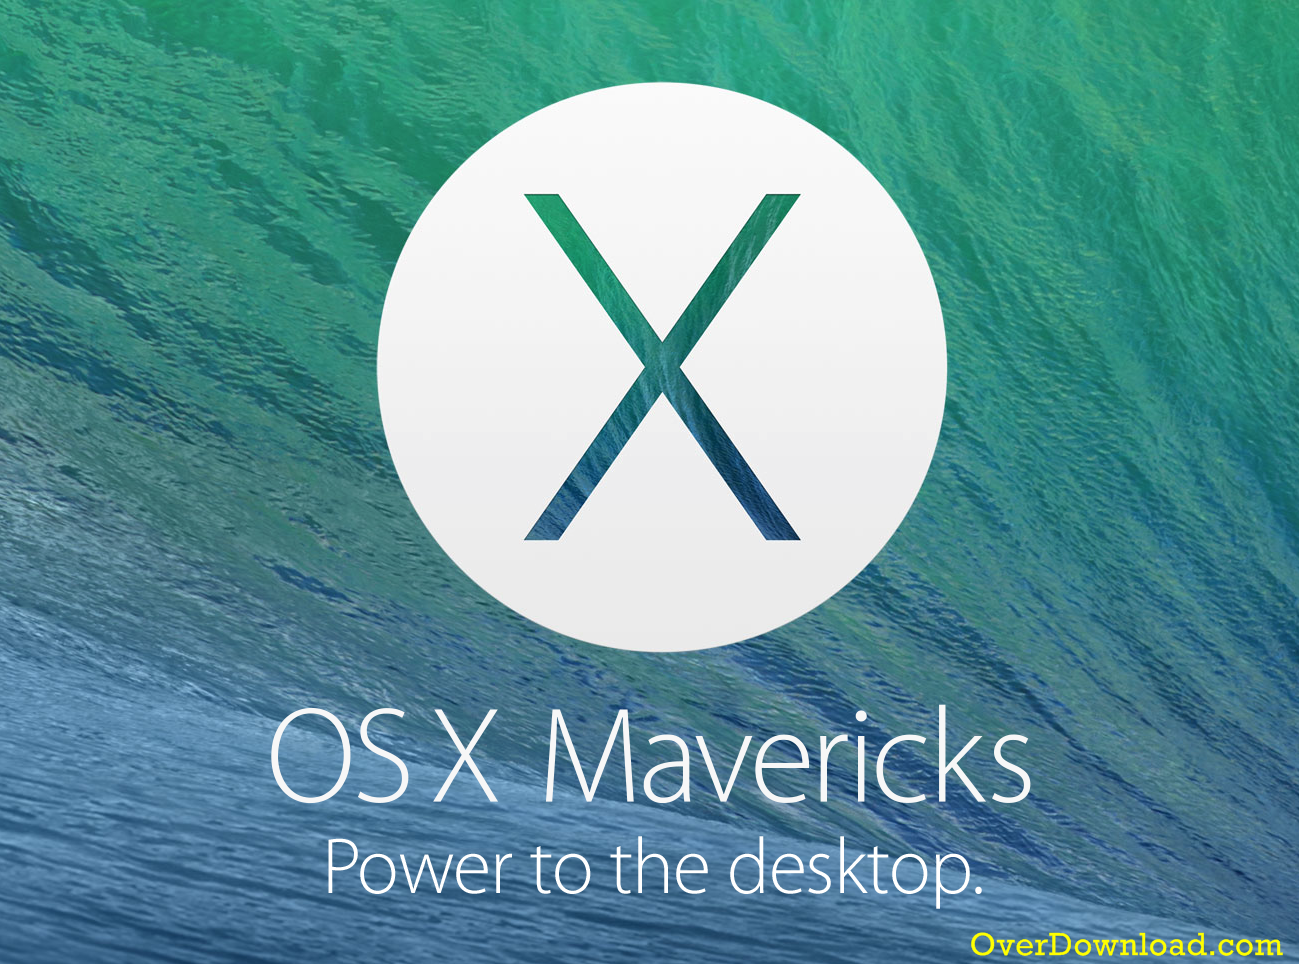 Mac Os X 10.10 Download Dmg 2016 - Free Full Version 2016 